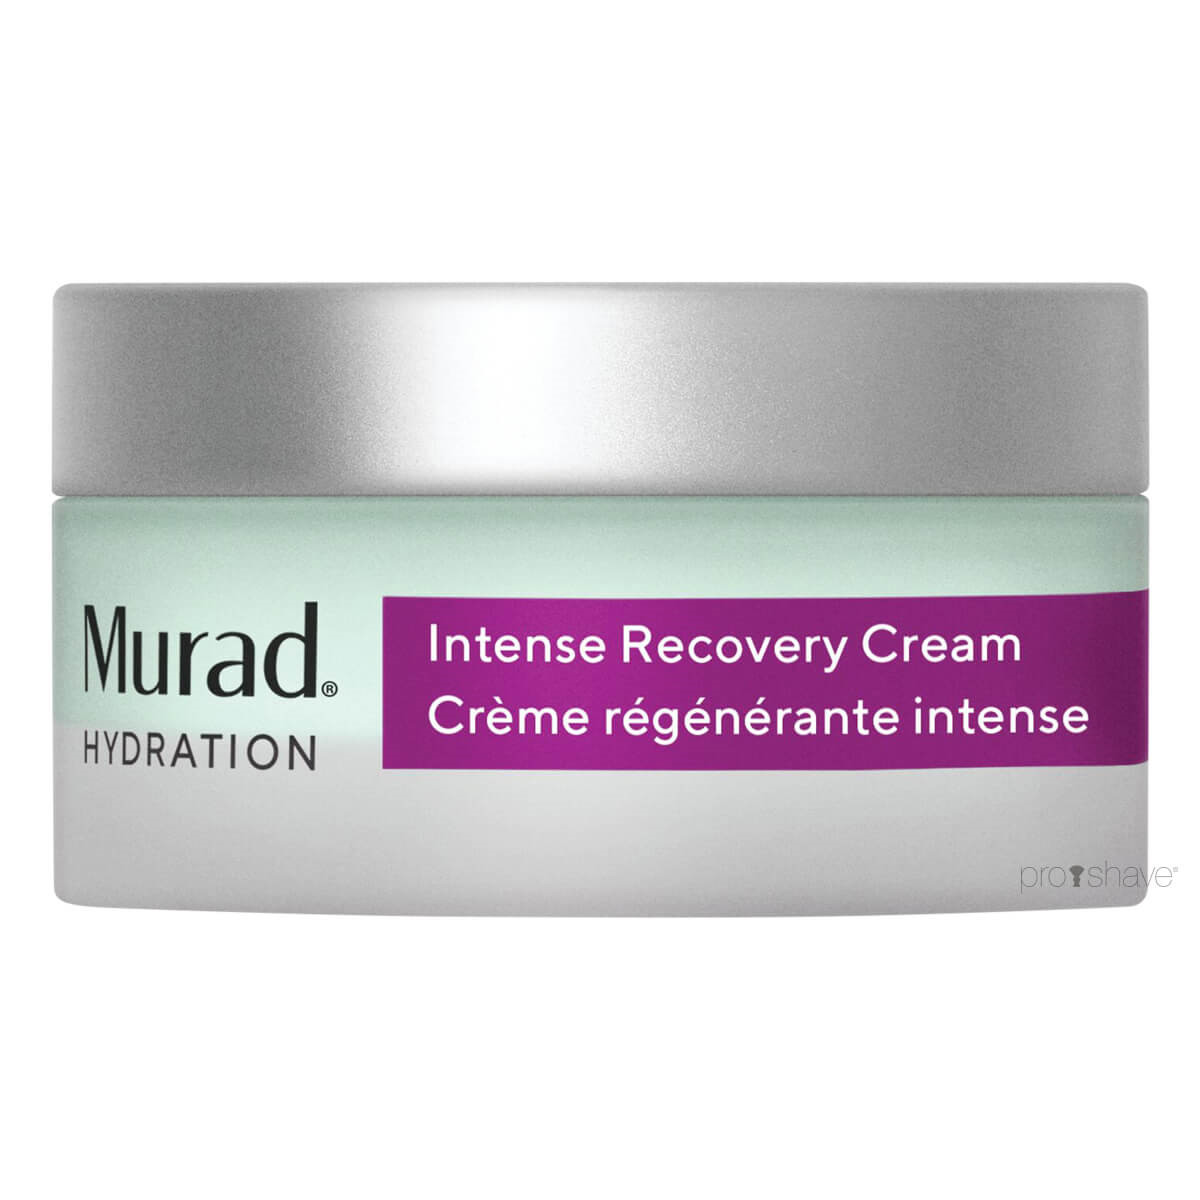 Se Murad Hydration Intense Recovery Cream 50ml. hos Proshave